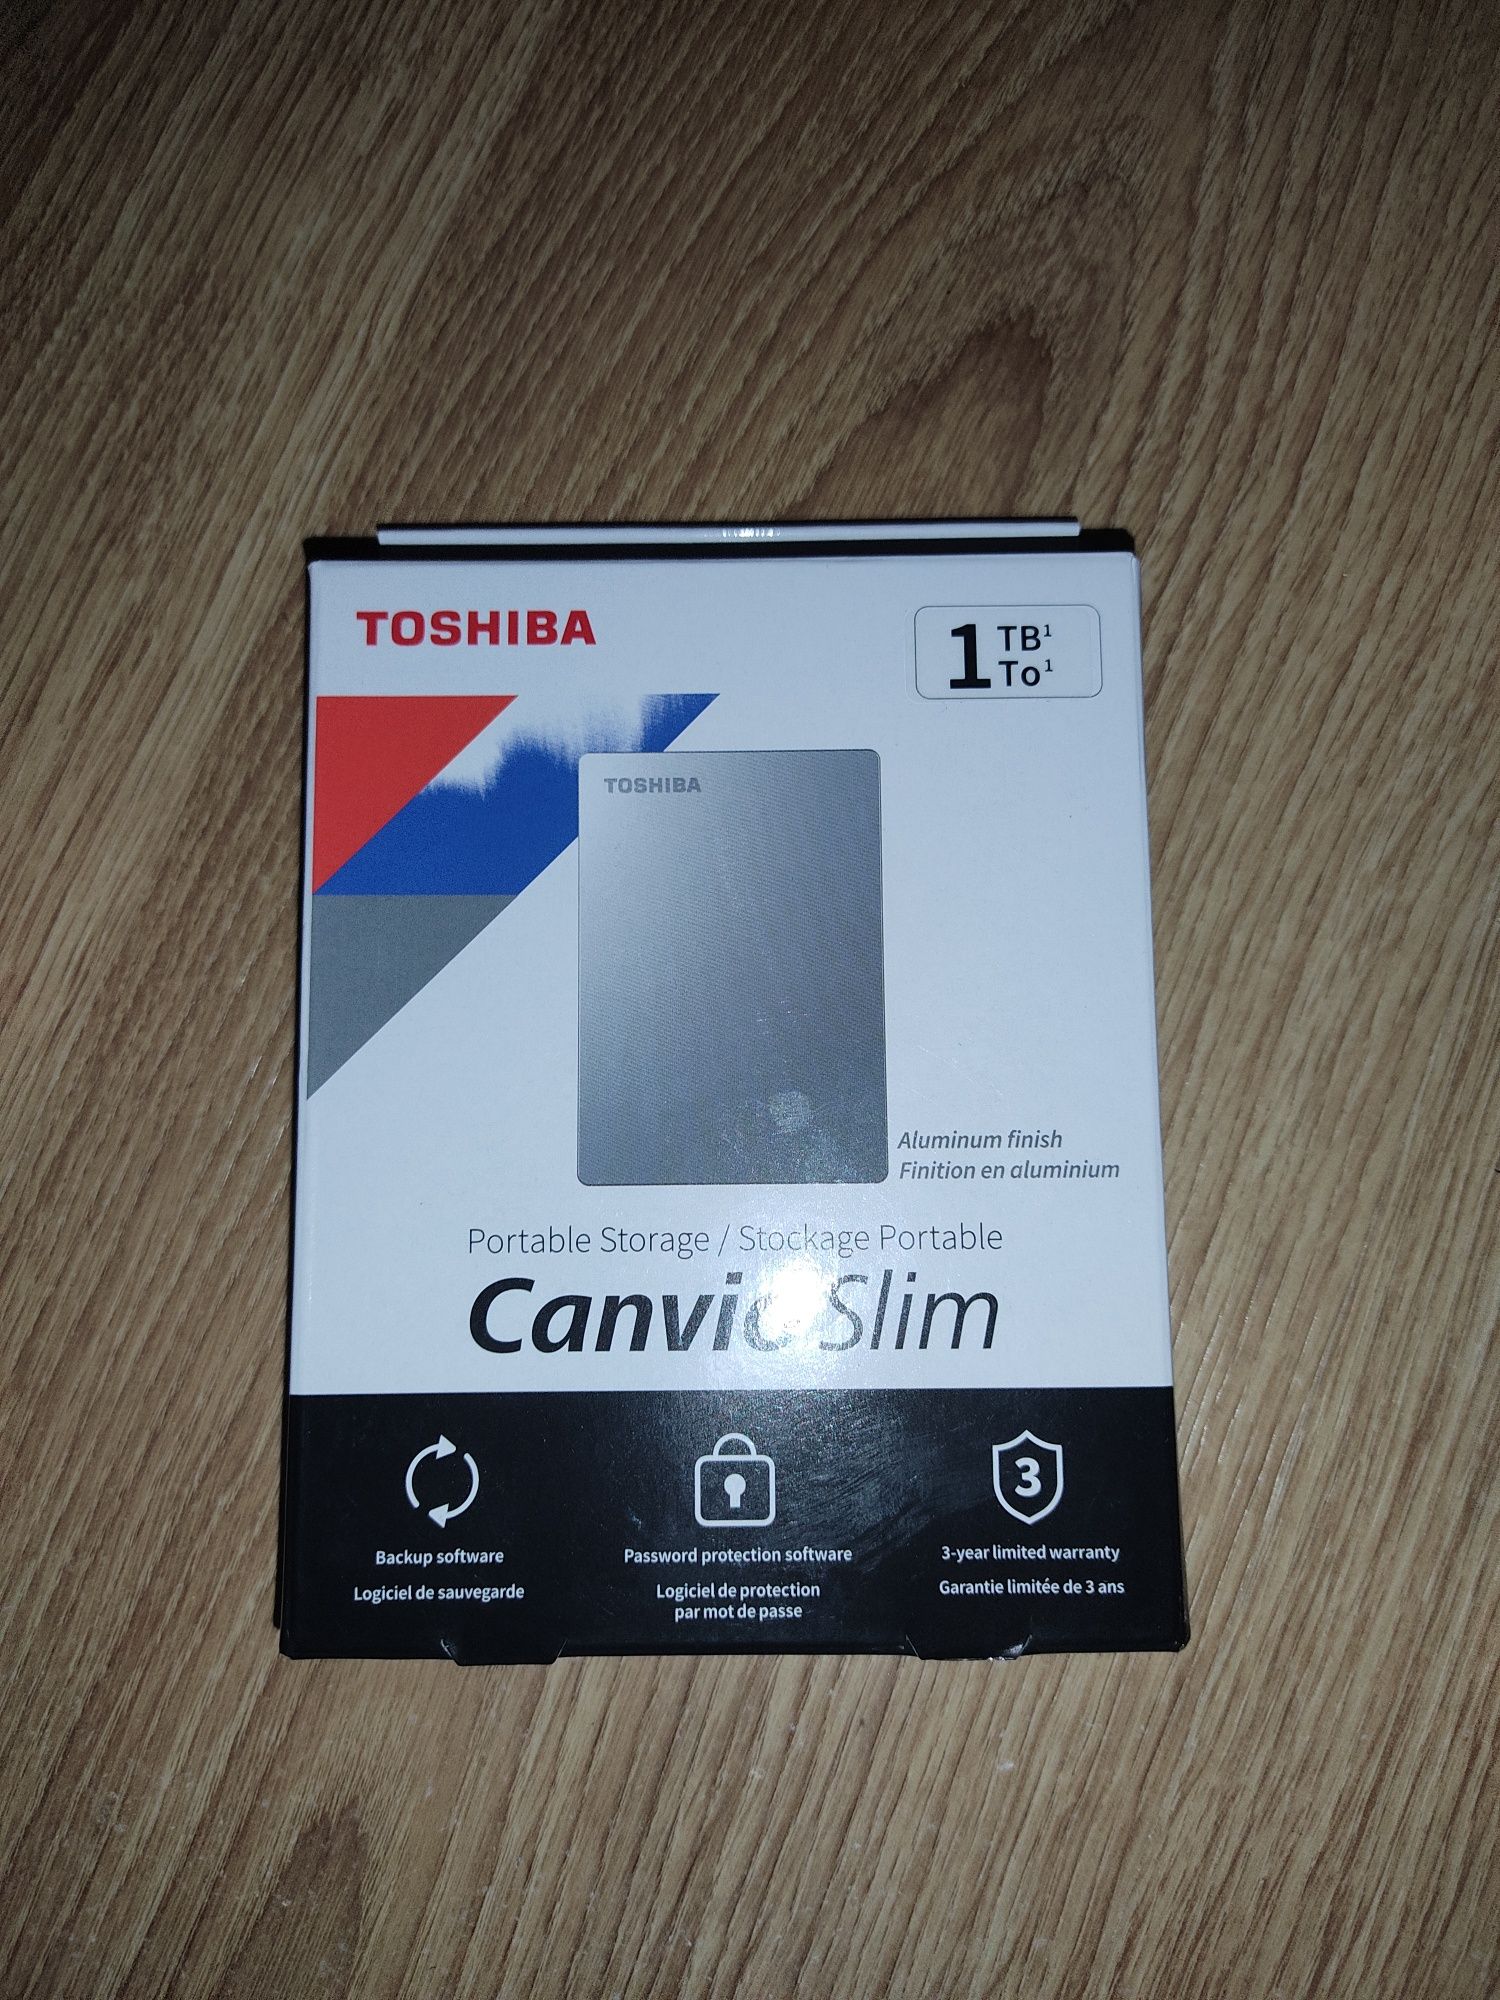 NOVO SELADO Toshiba Canvio Slim 1TB